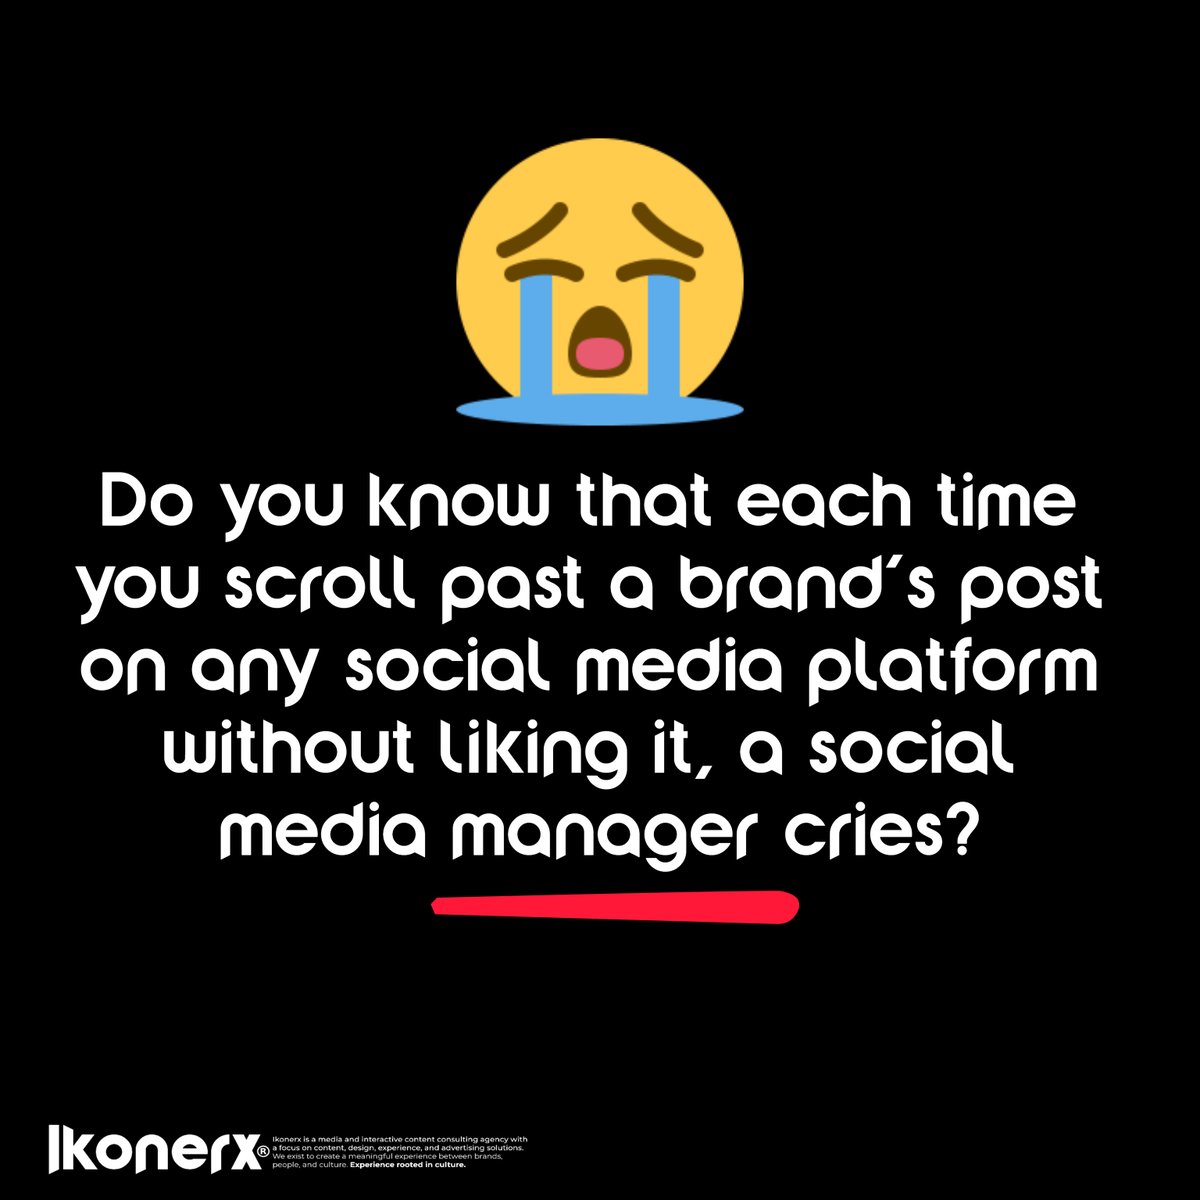 Every Social media manager knows this. 
.
.
.
-------
#Ikonerx #socialmediamanager #relatablepost #BBTitans #relatable #Socialmedia #socialmediatips #socialmedianews